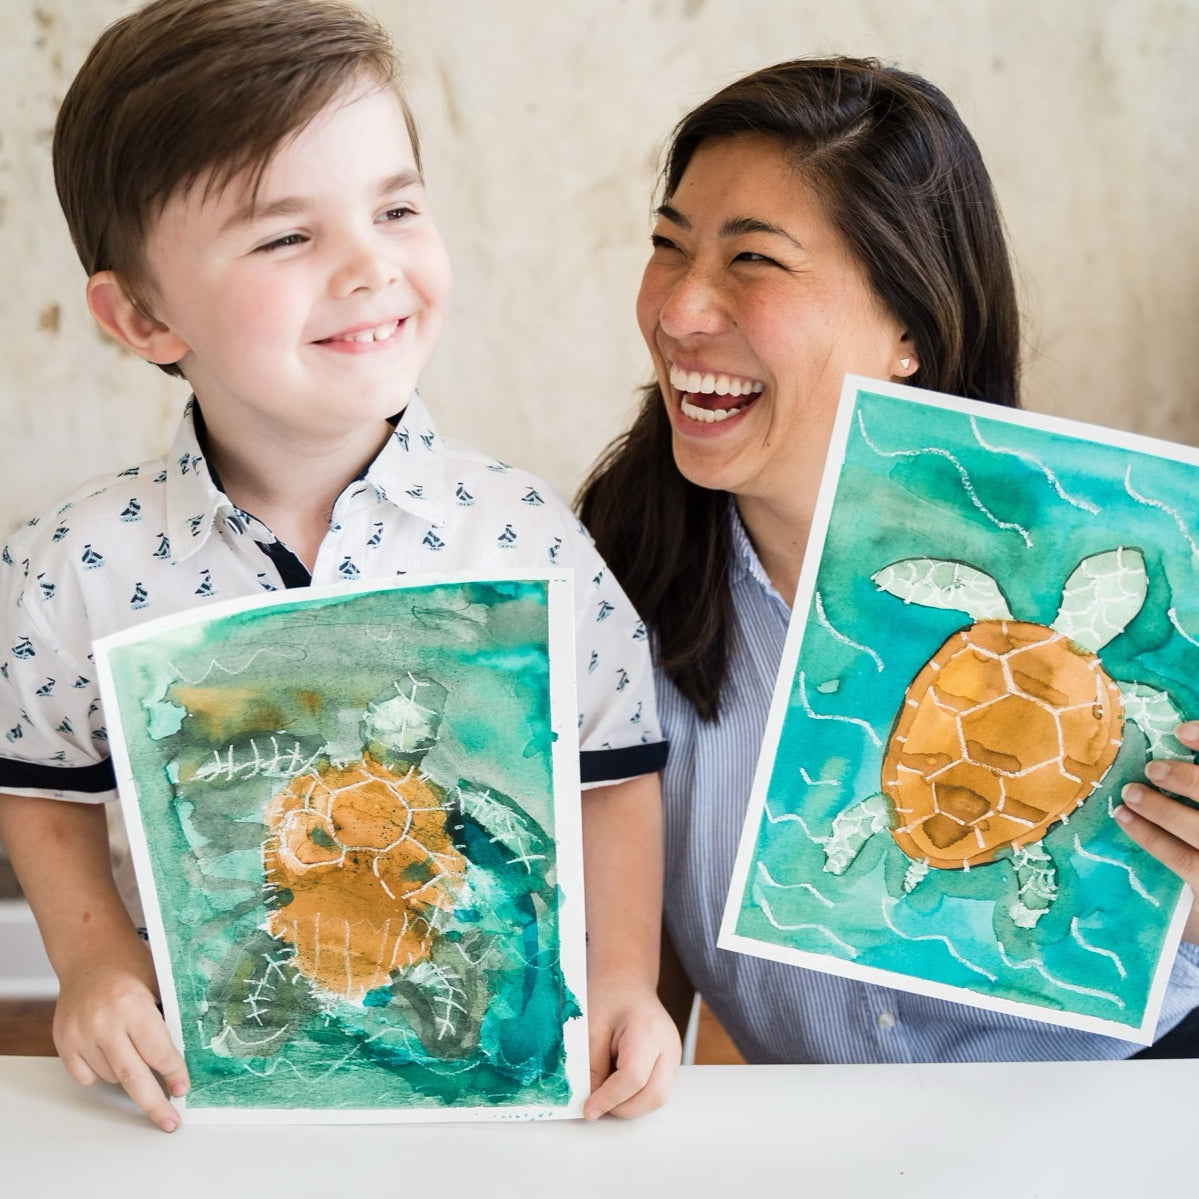 Three Kids Art Projects to Beat the Summer Slump– Let's Make Art